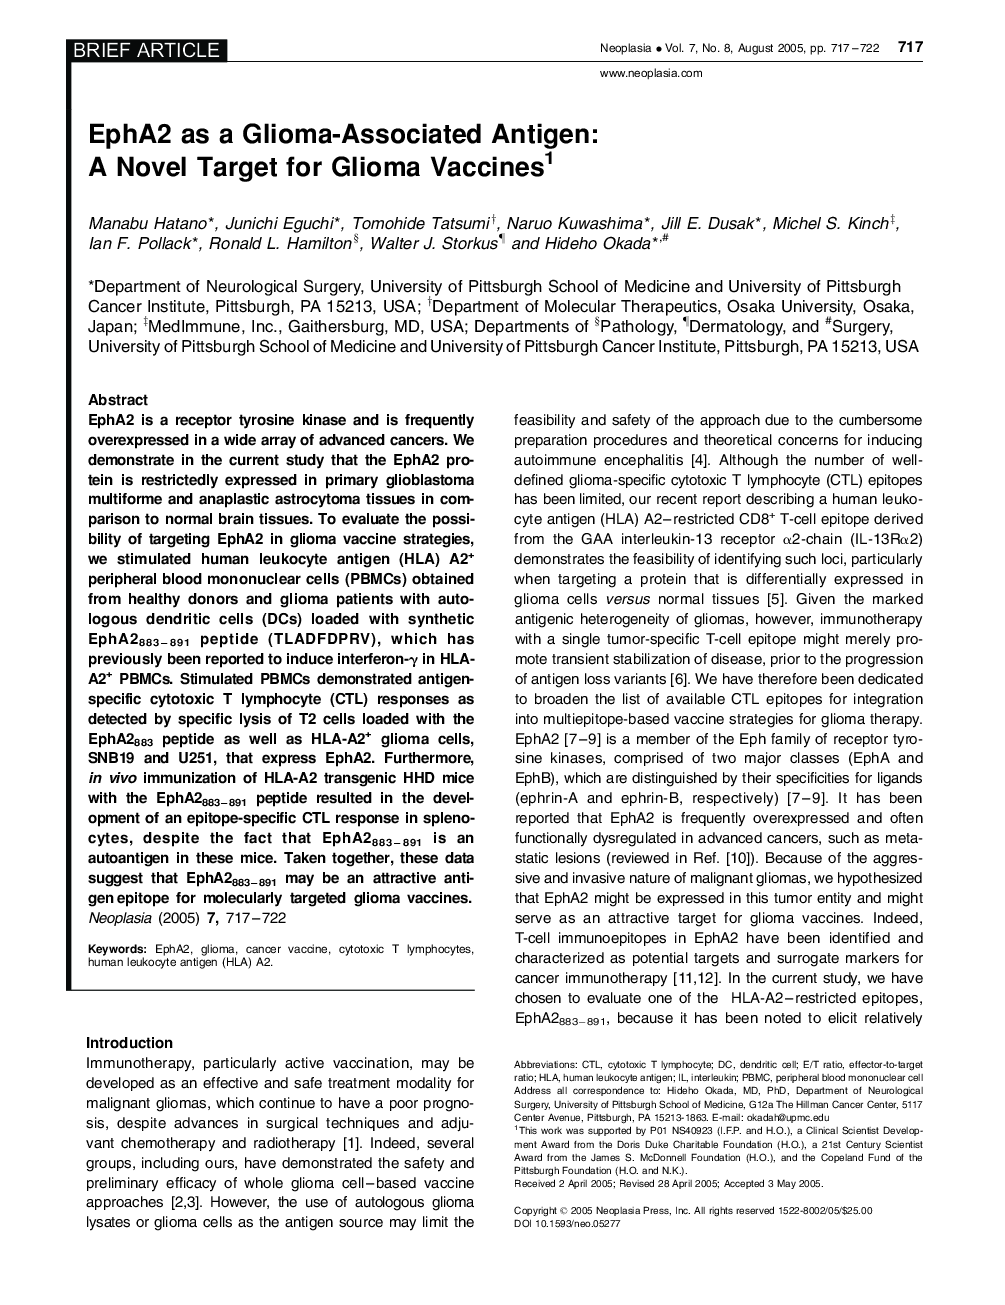 EphA2 as a Glioma-Associated Antigen: A Novel Target for Glioma Vaccines